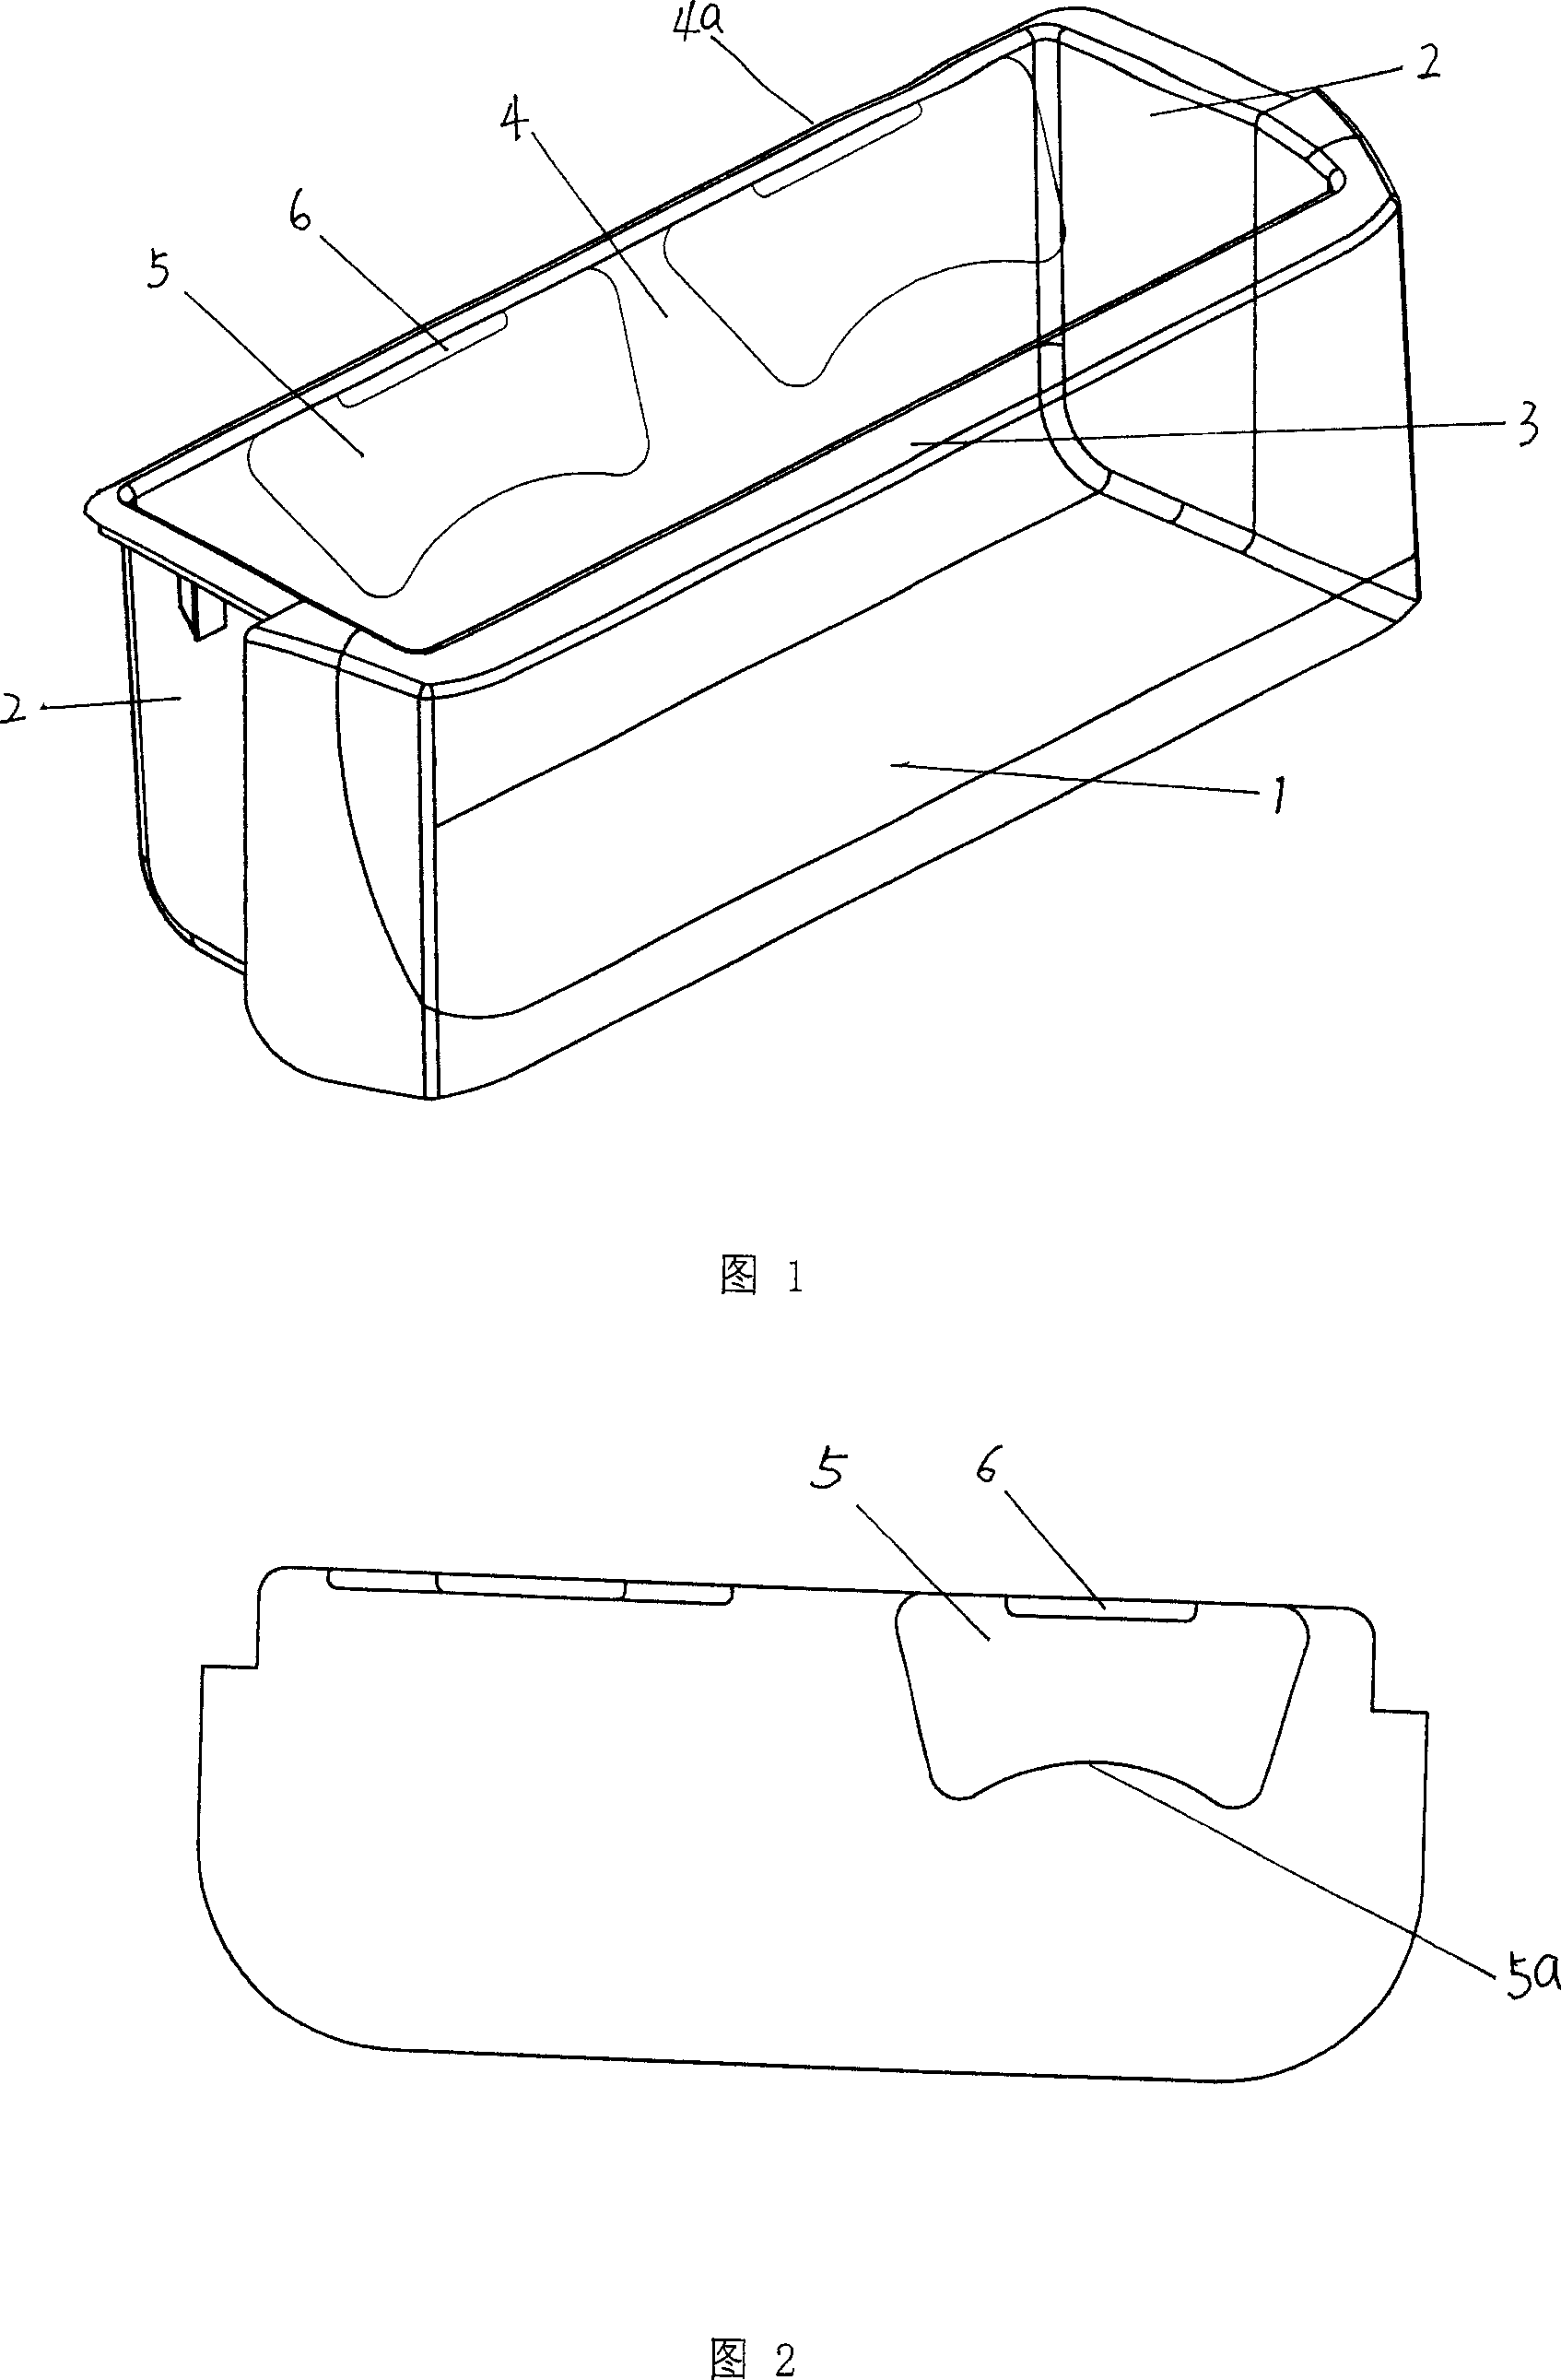 Refrigerating bottle base in refrigerator with overturn bottle-clip device